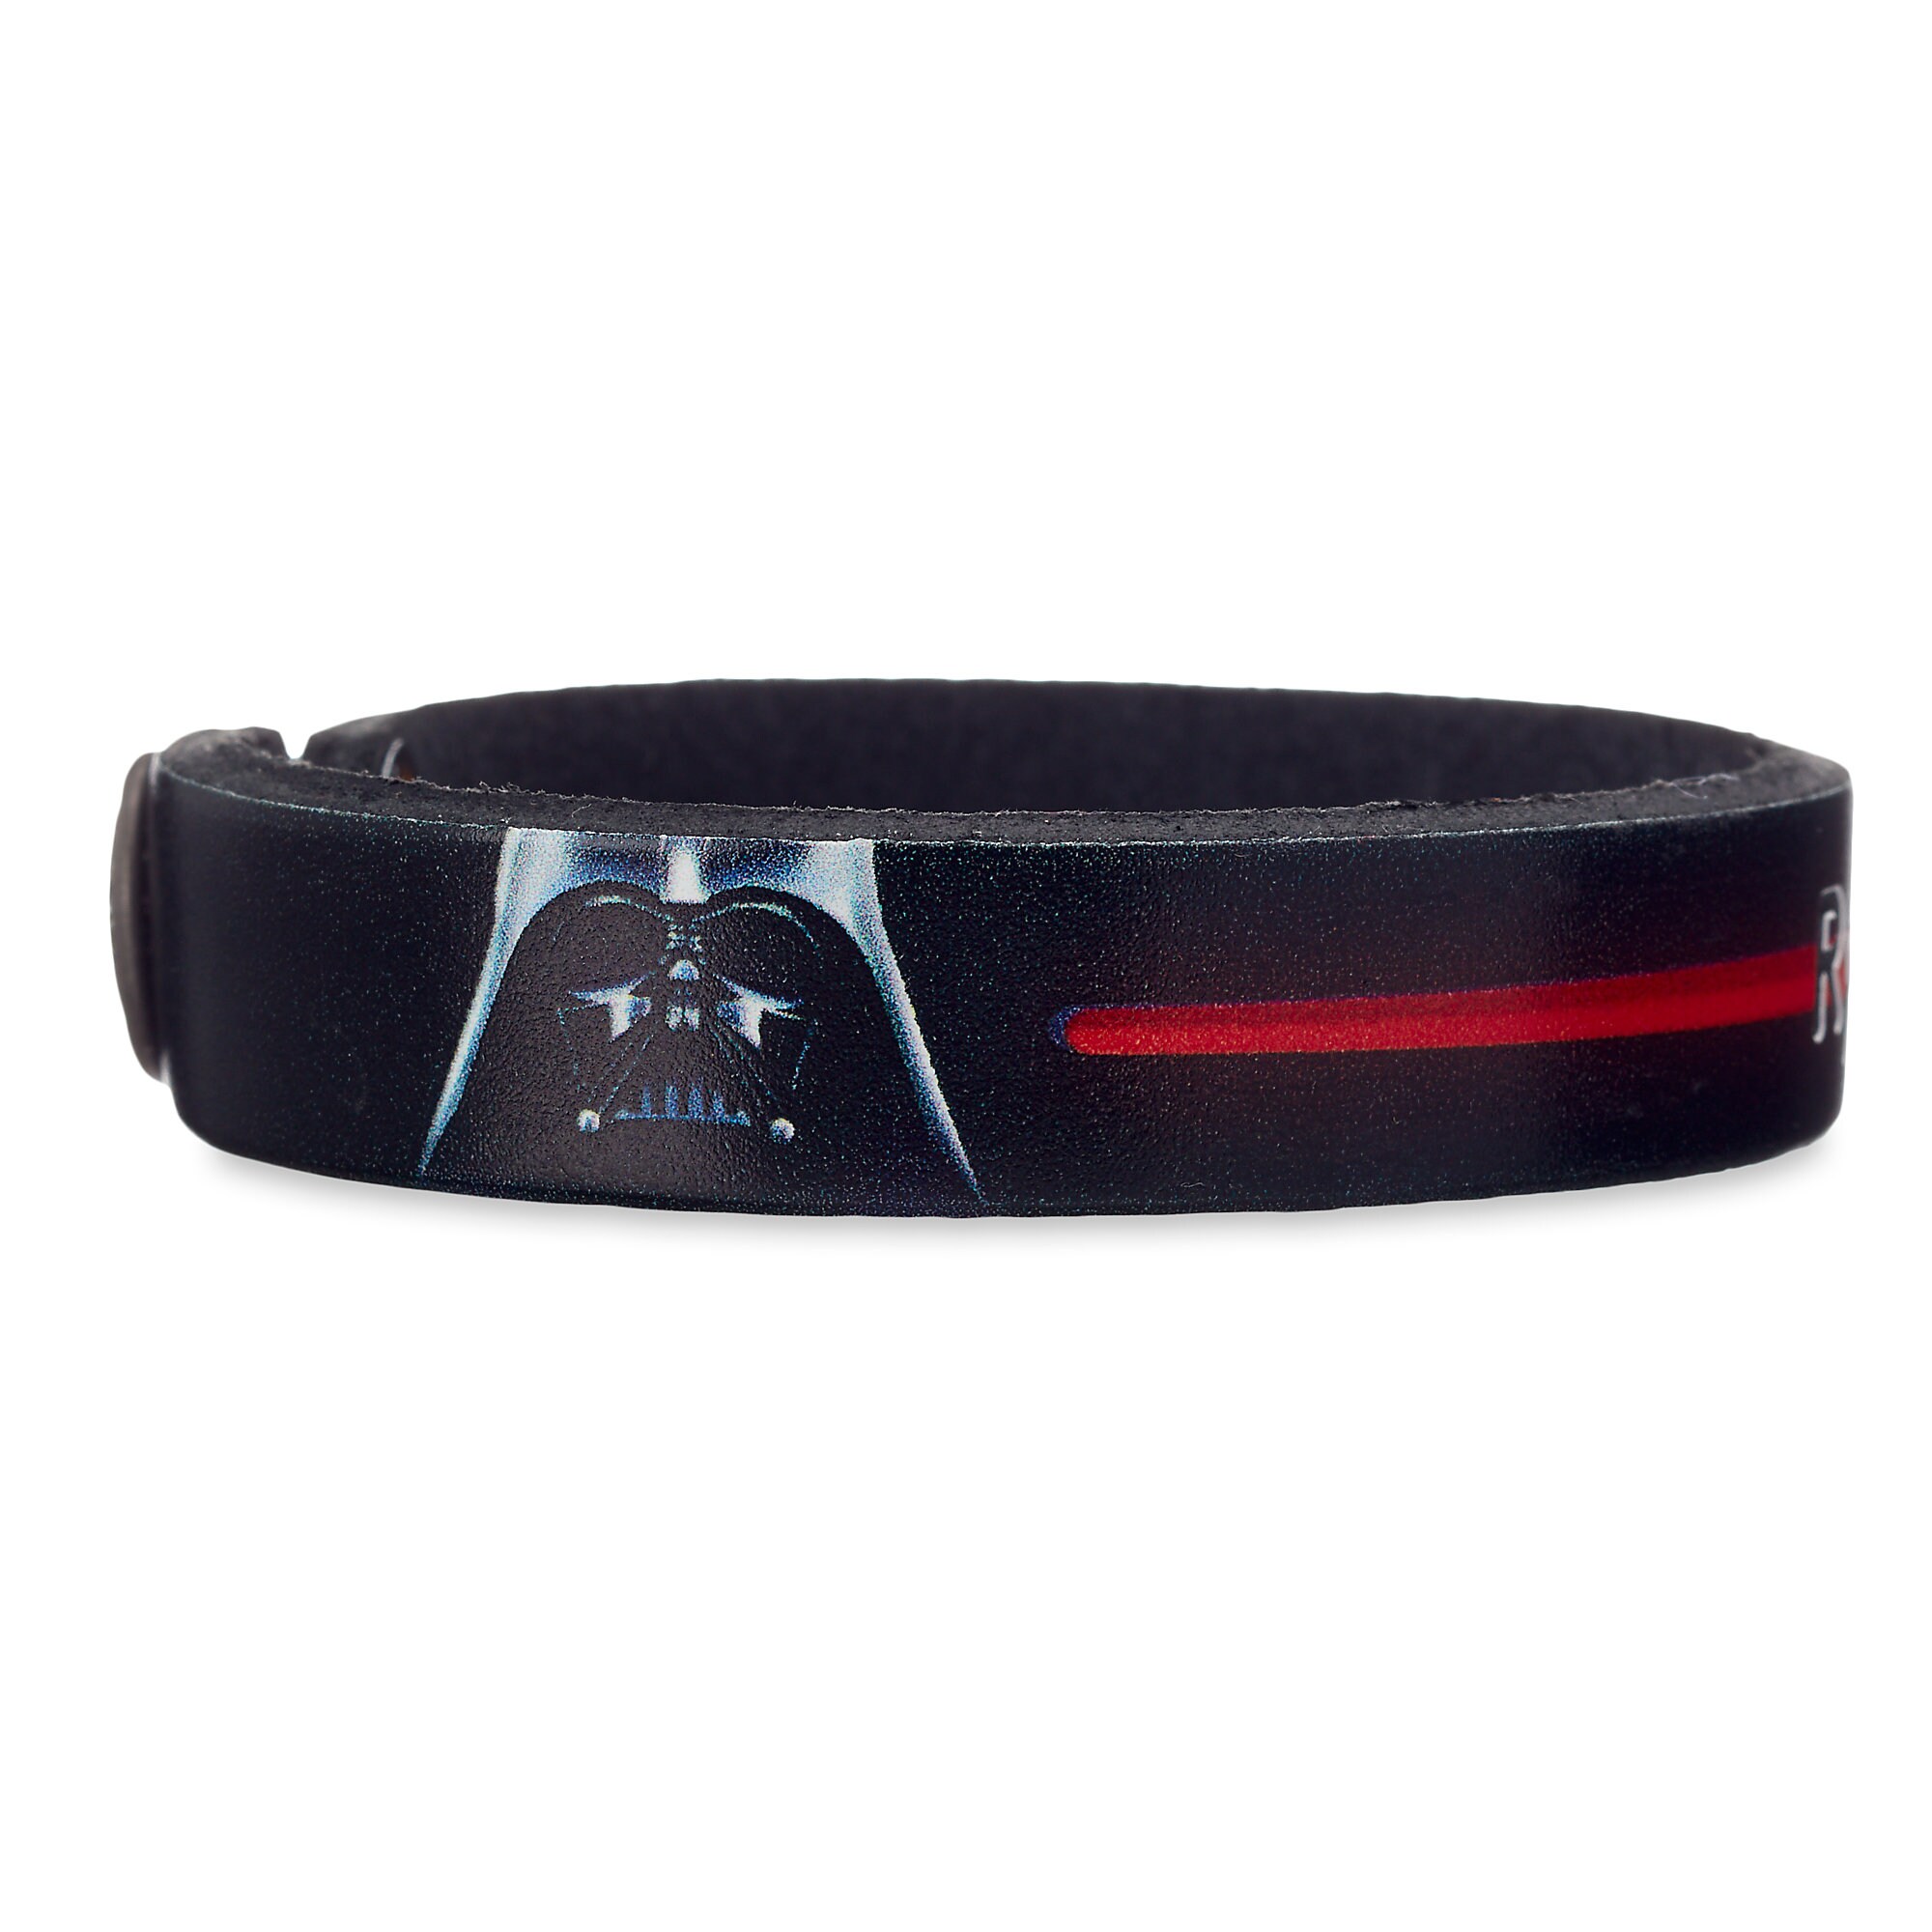 Darth Vader Leather Bracelet - Star Wars - Personalizable